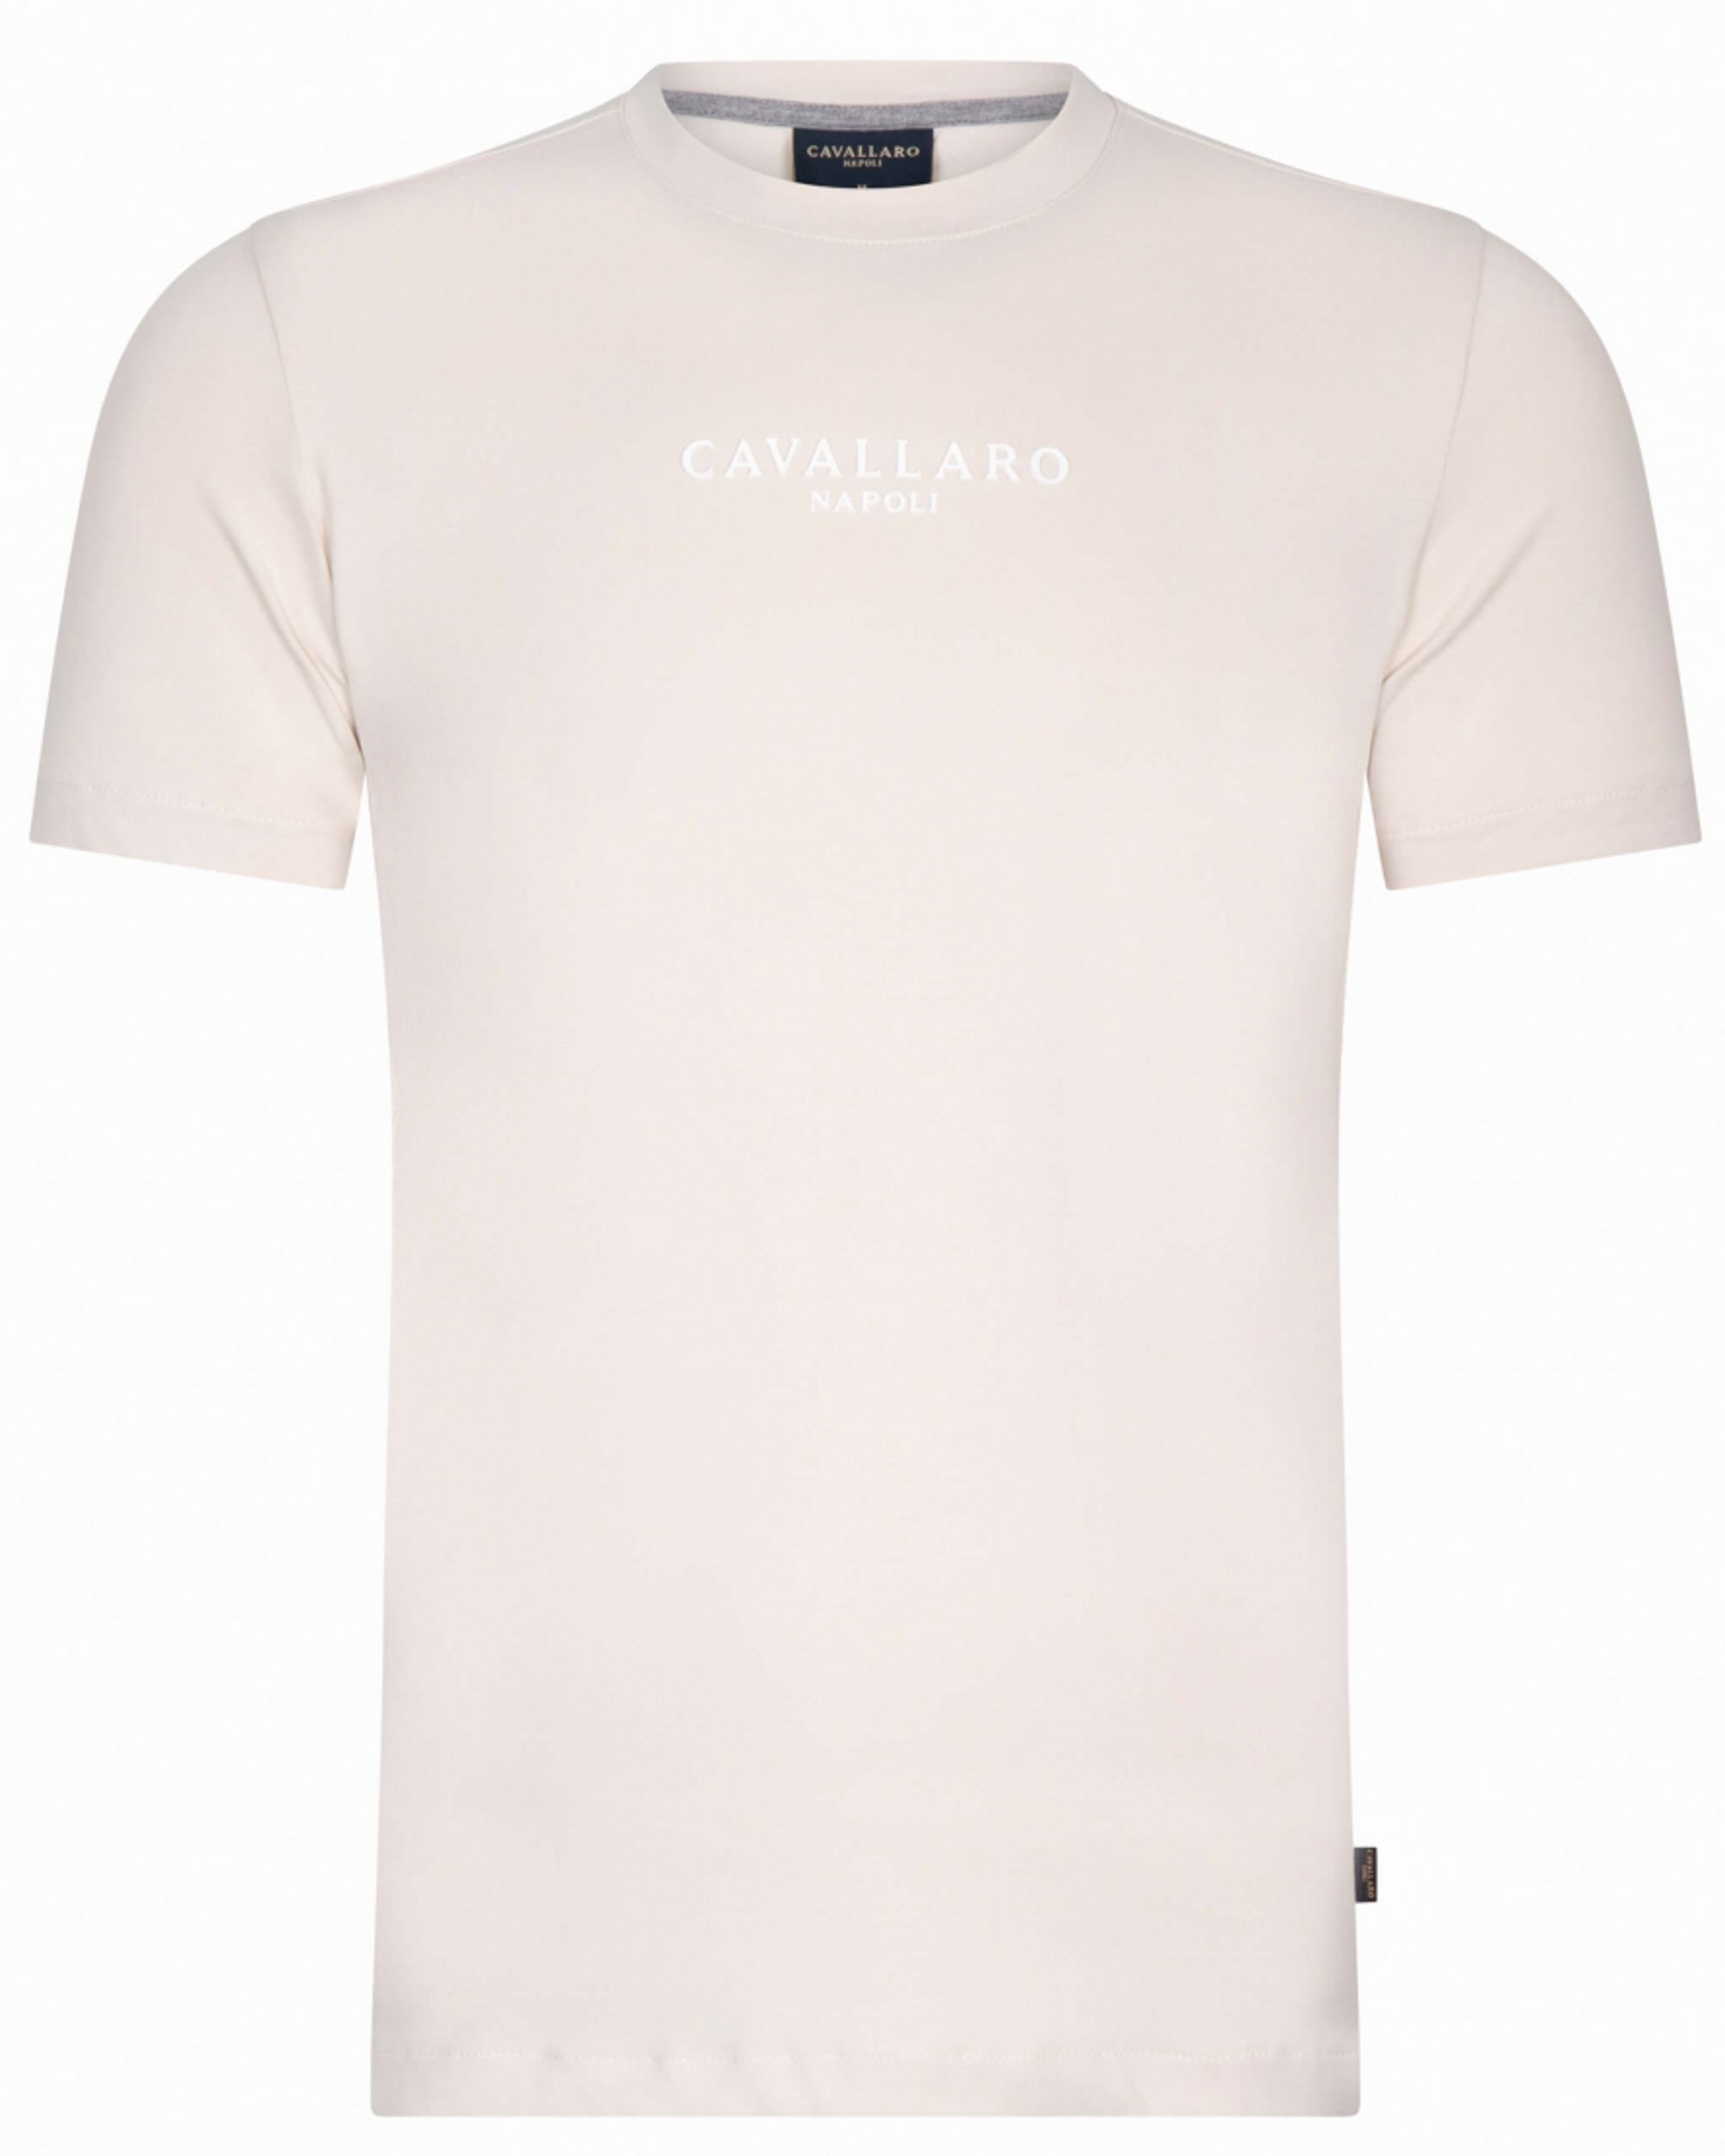 Cavallaro Bari T-shirt KM Kit 094411-001-L